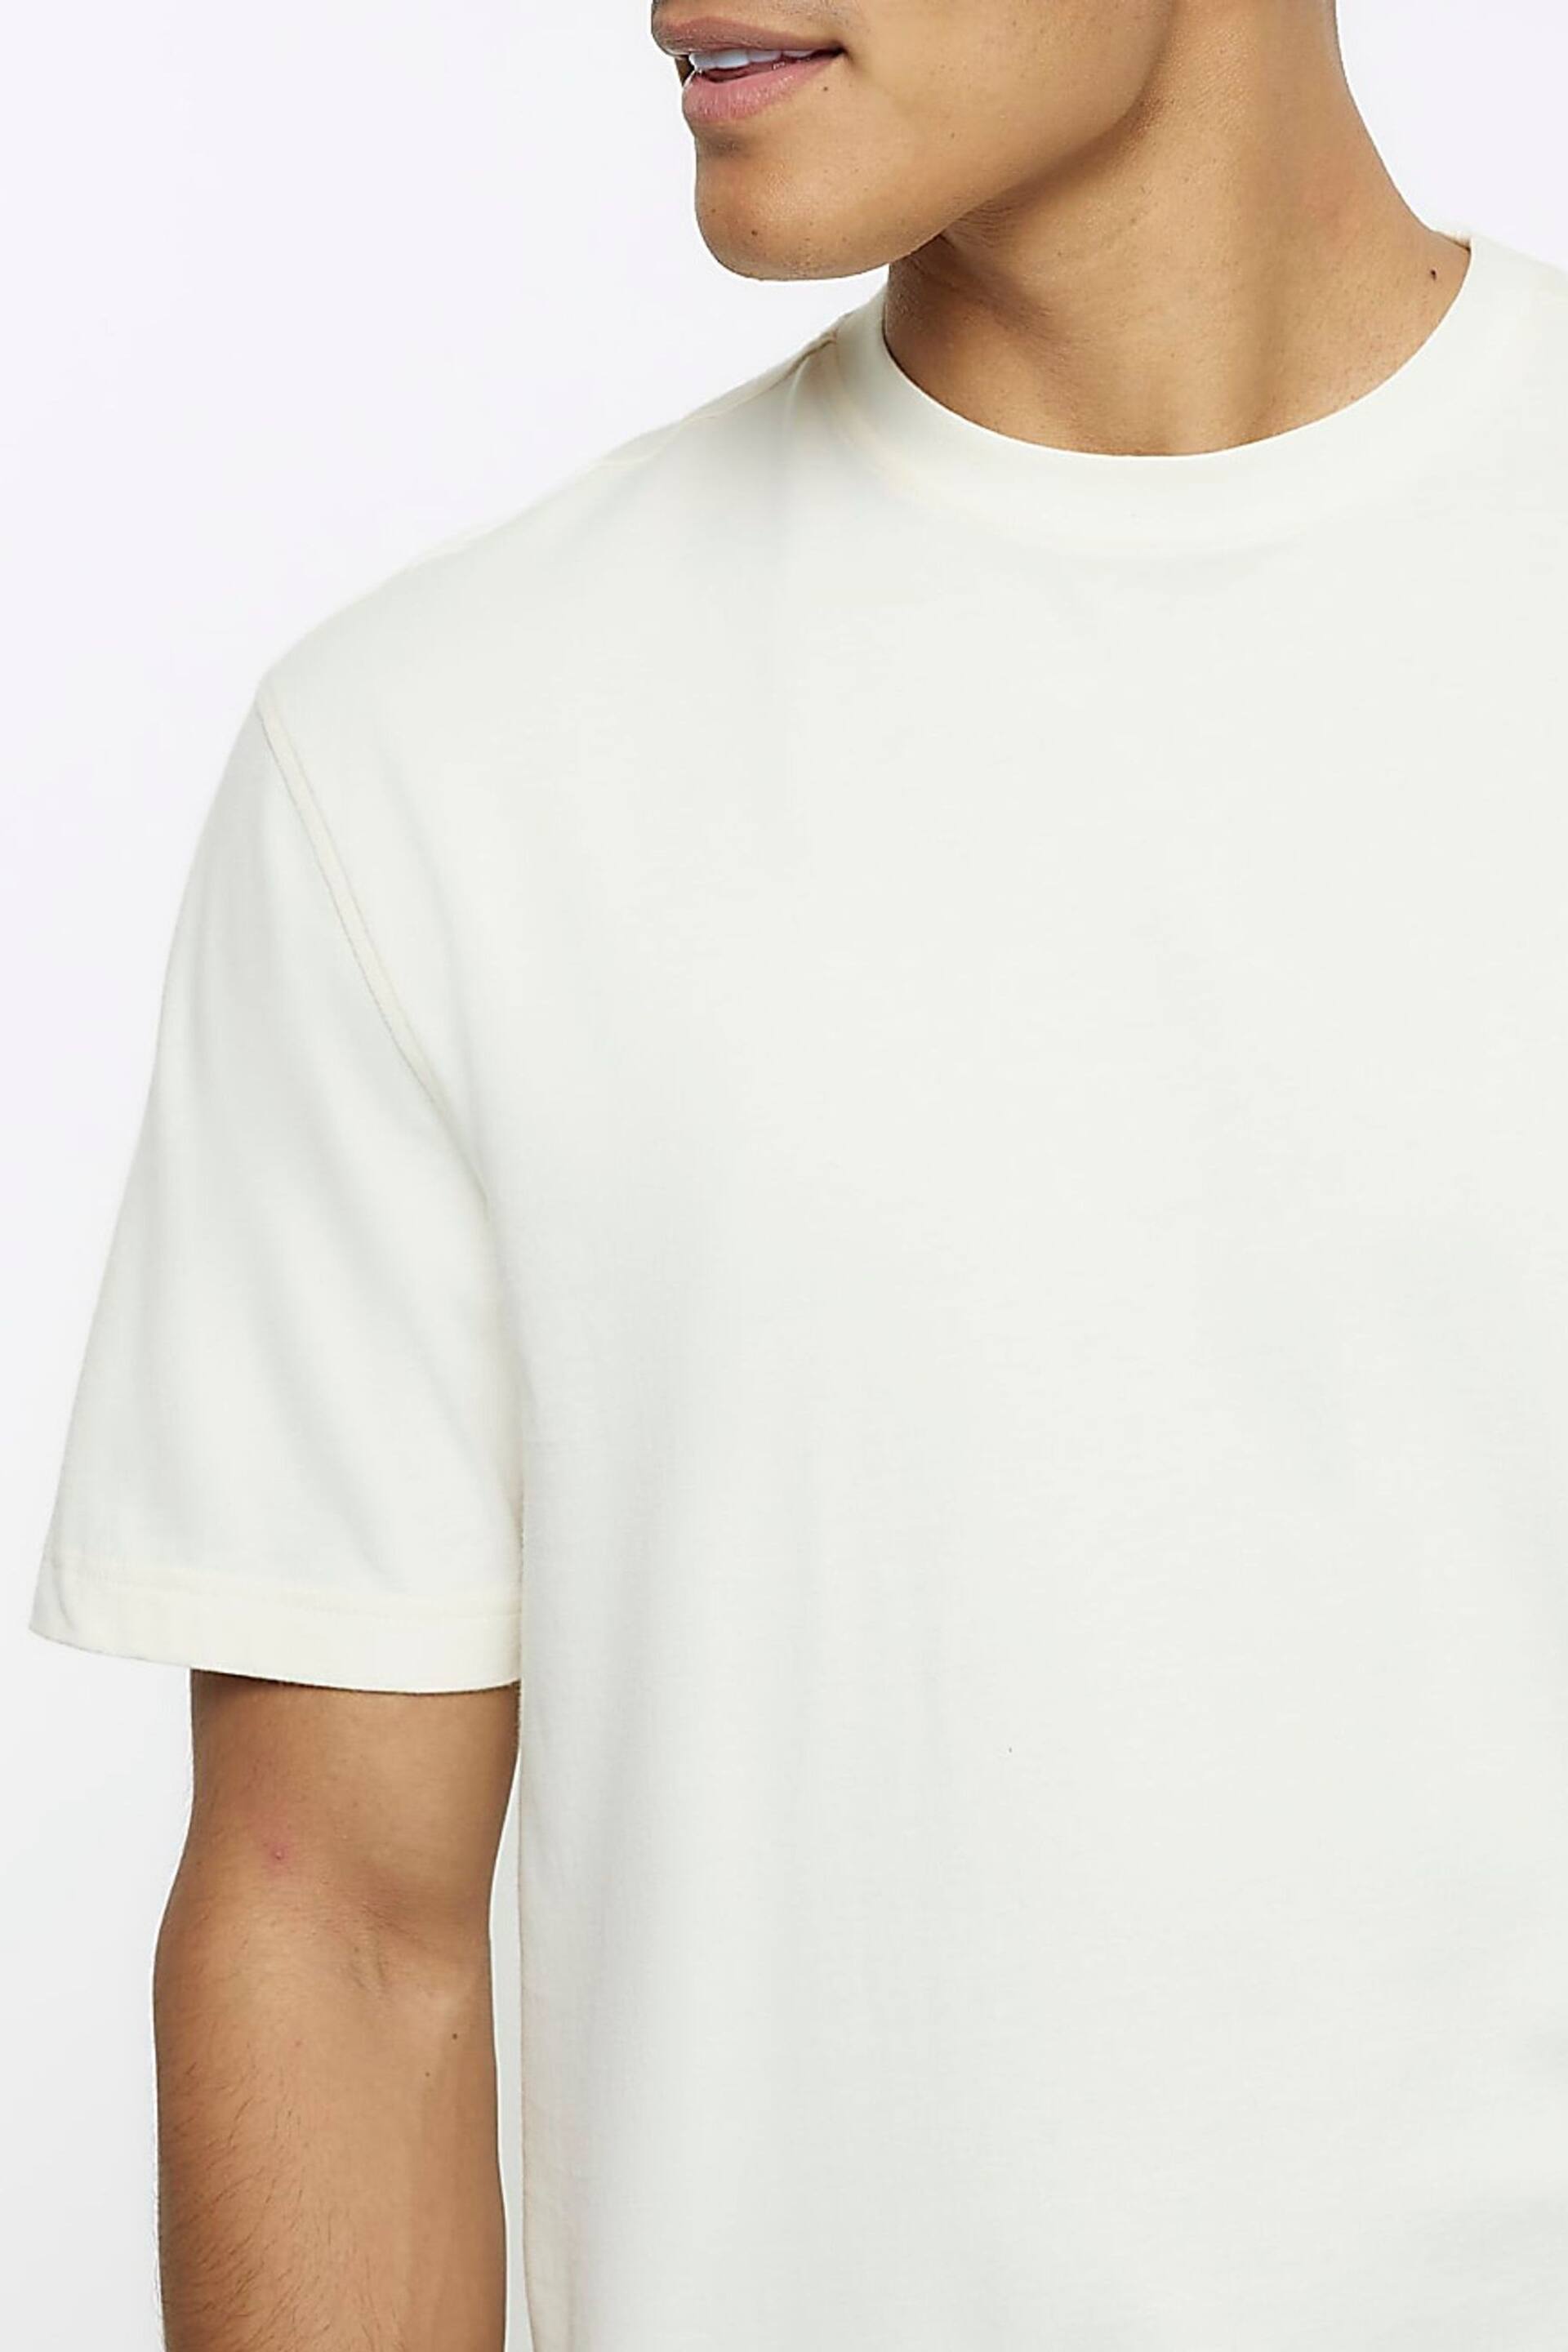 River Island White Chrome Regular Fit T-Shirt - Image 4 of 4